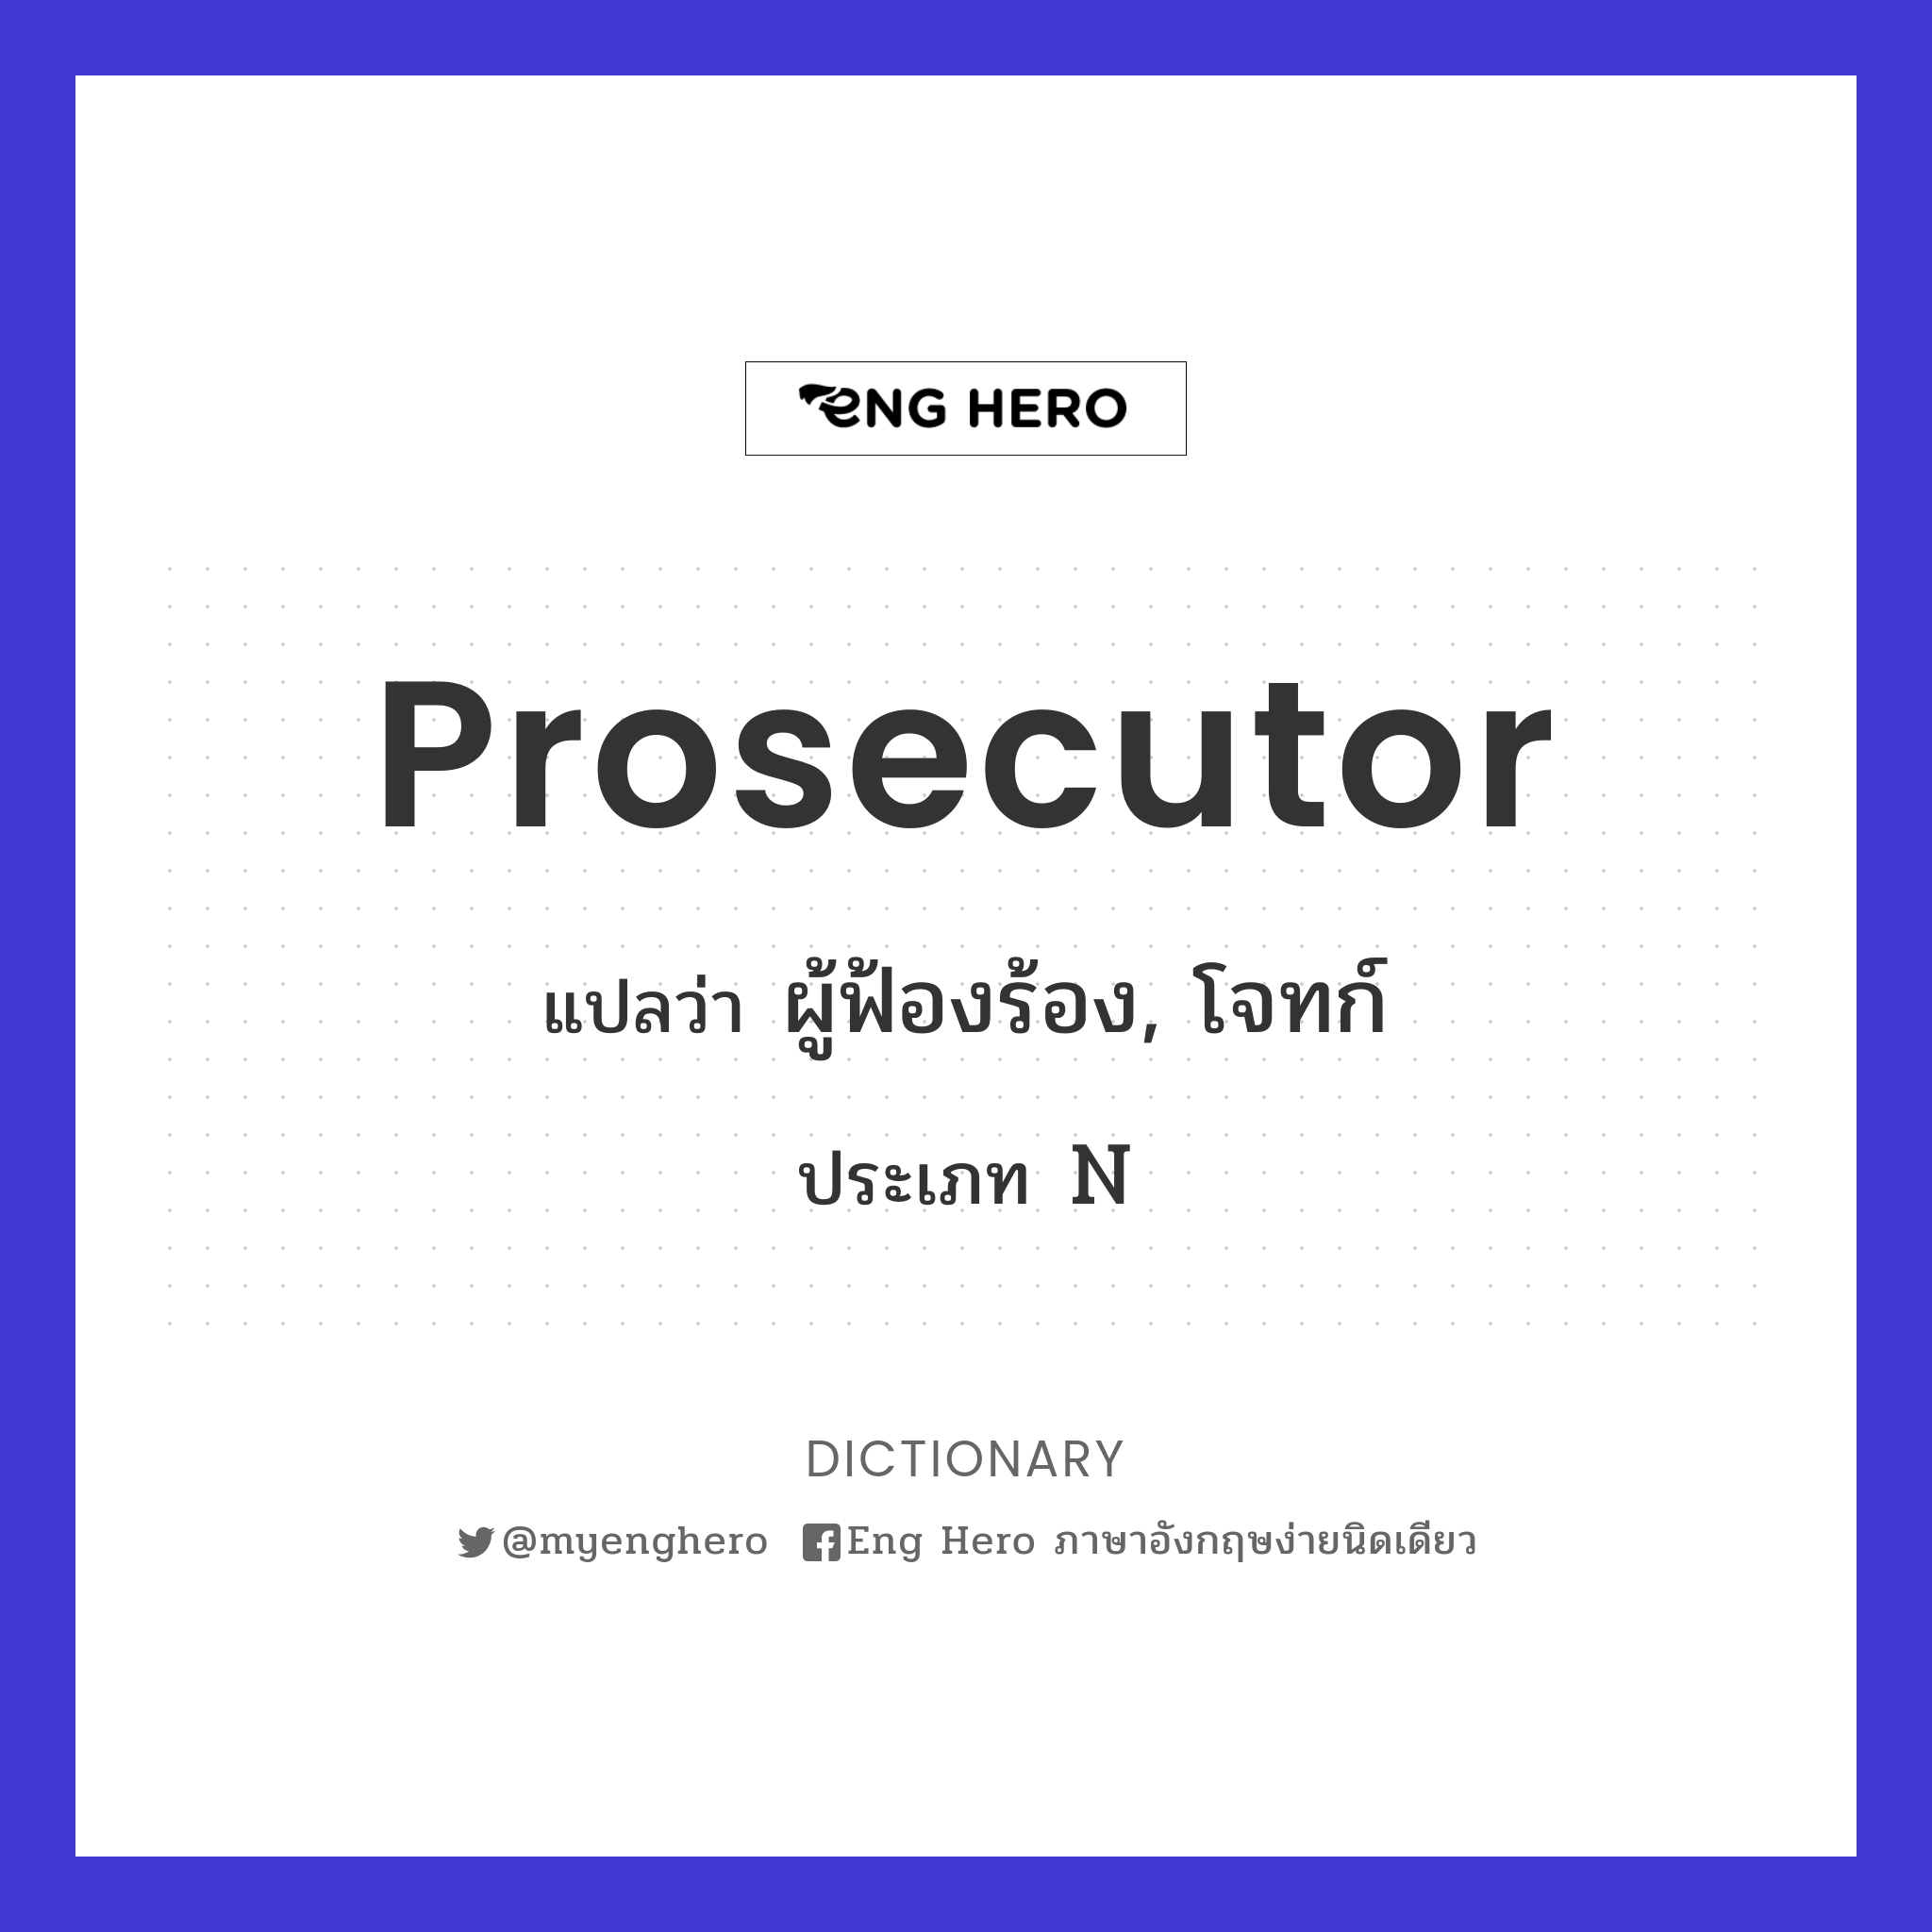 prosecutor